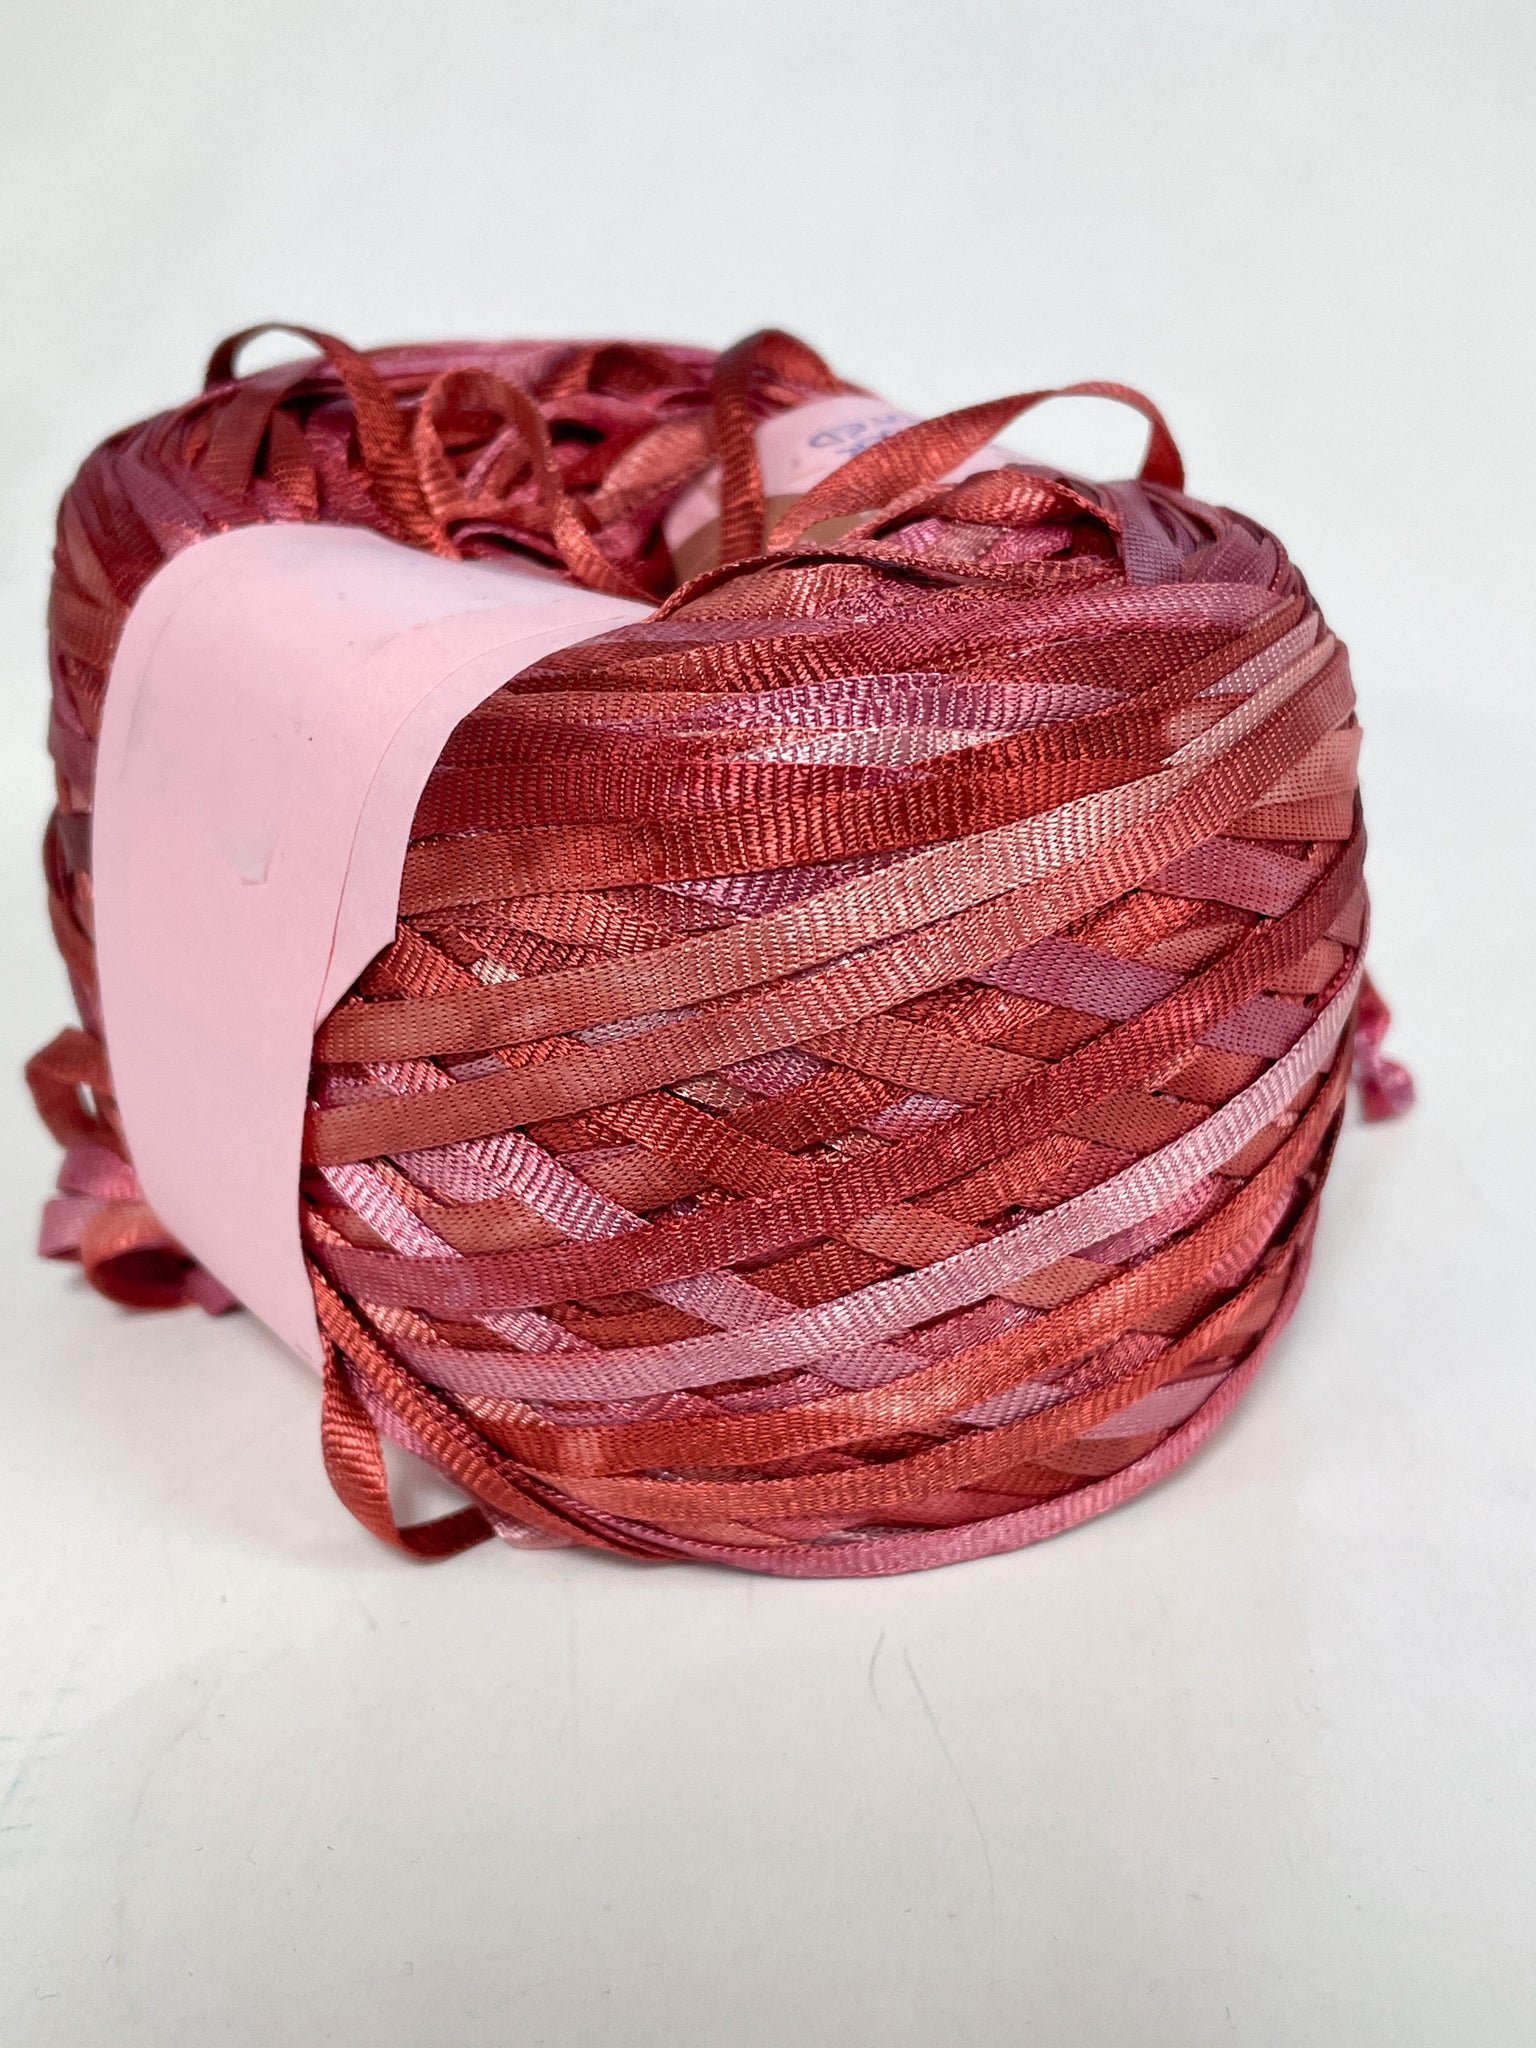 Yarn Nylon Microfiber - Pinks and Mauves